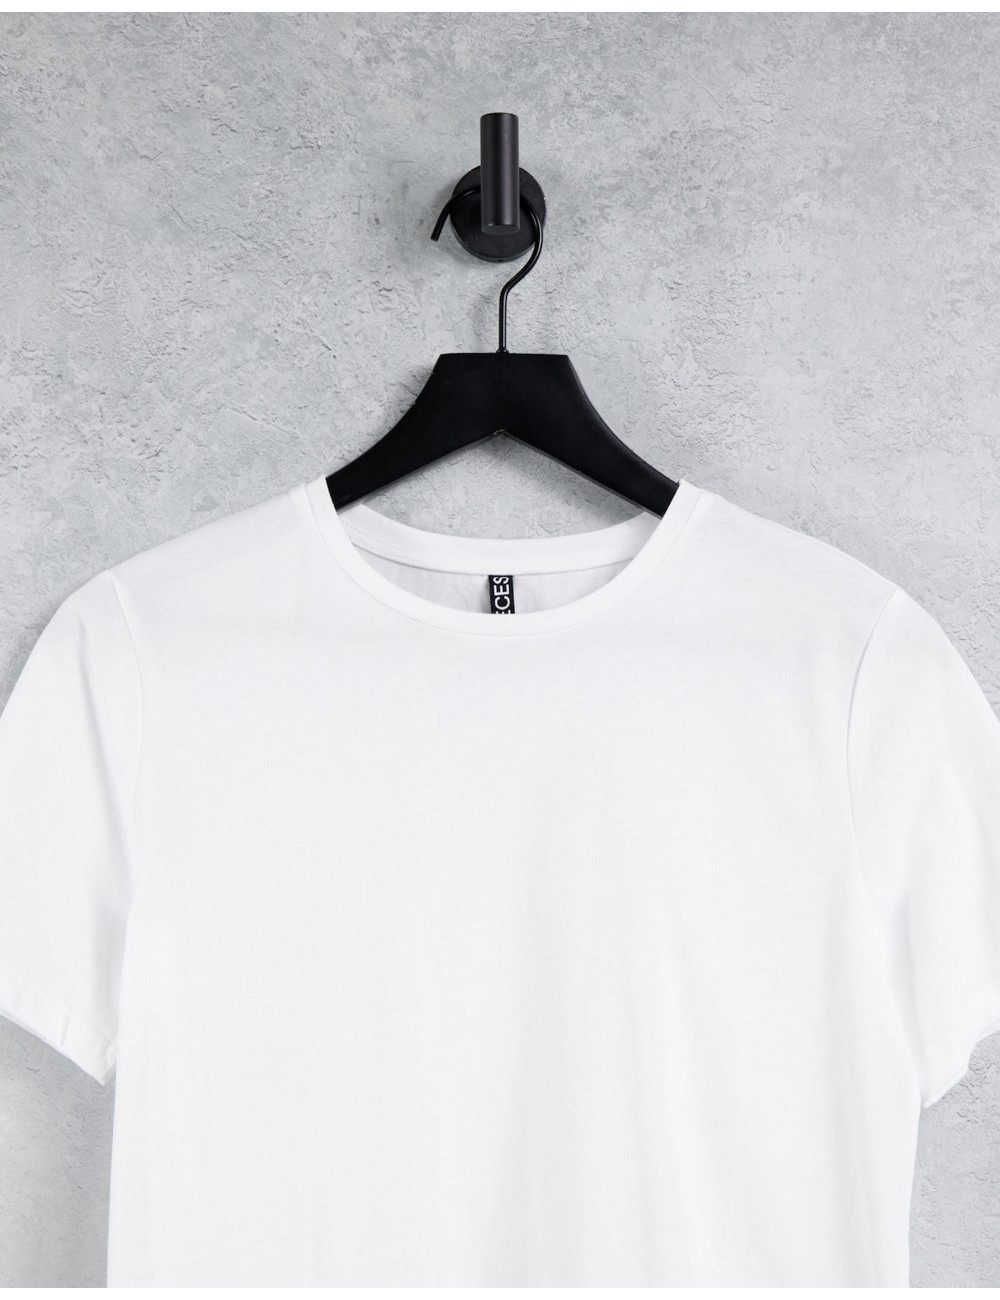 Pieces crop t-shirt in white